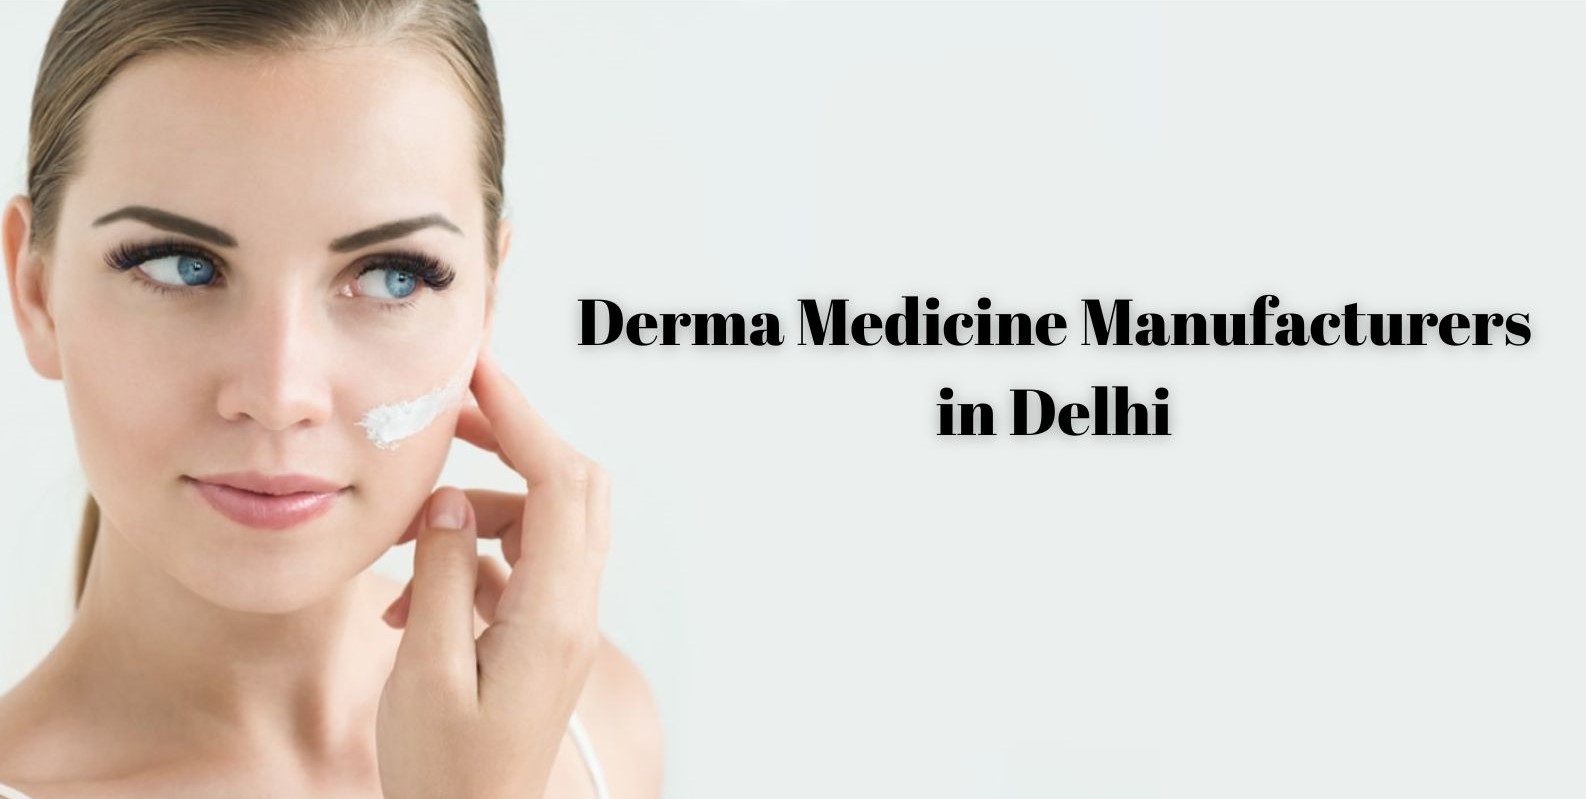 Derma Medicine Manufacturers in Delhi